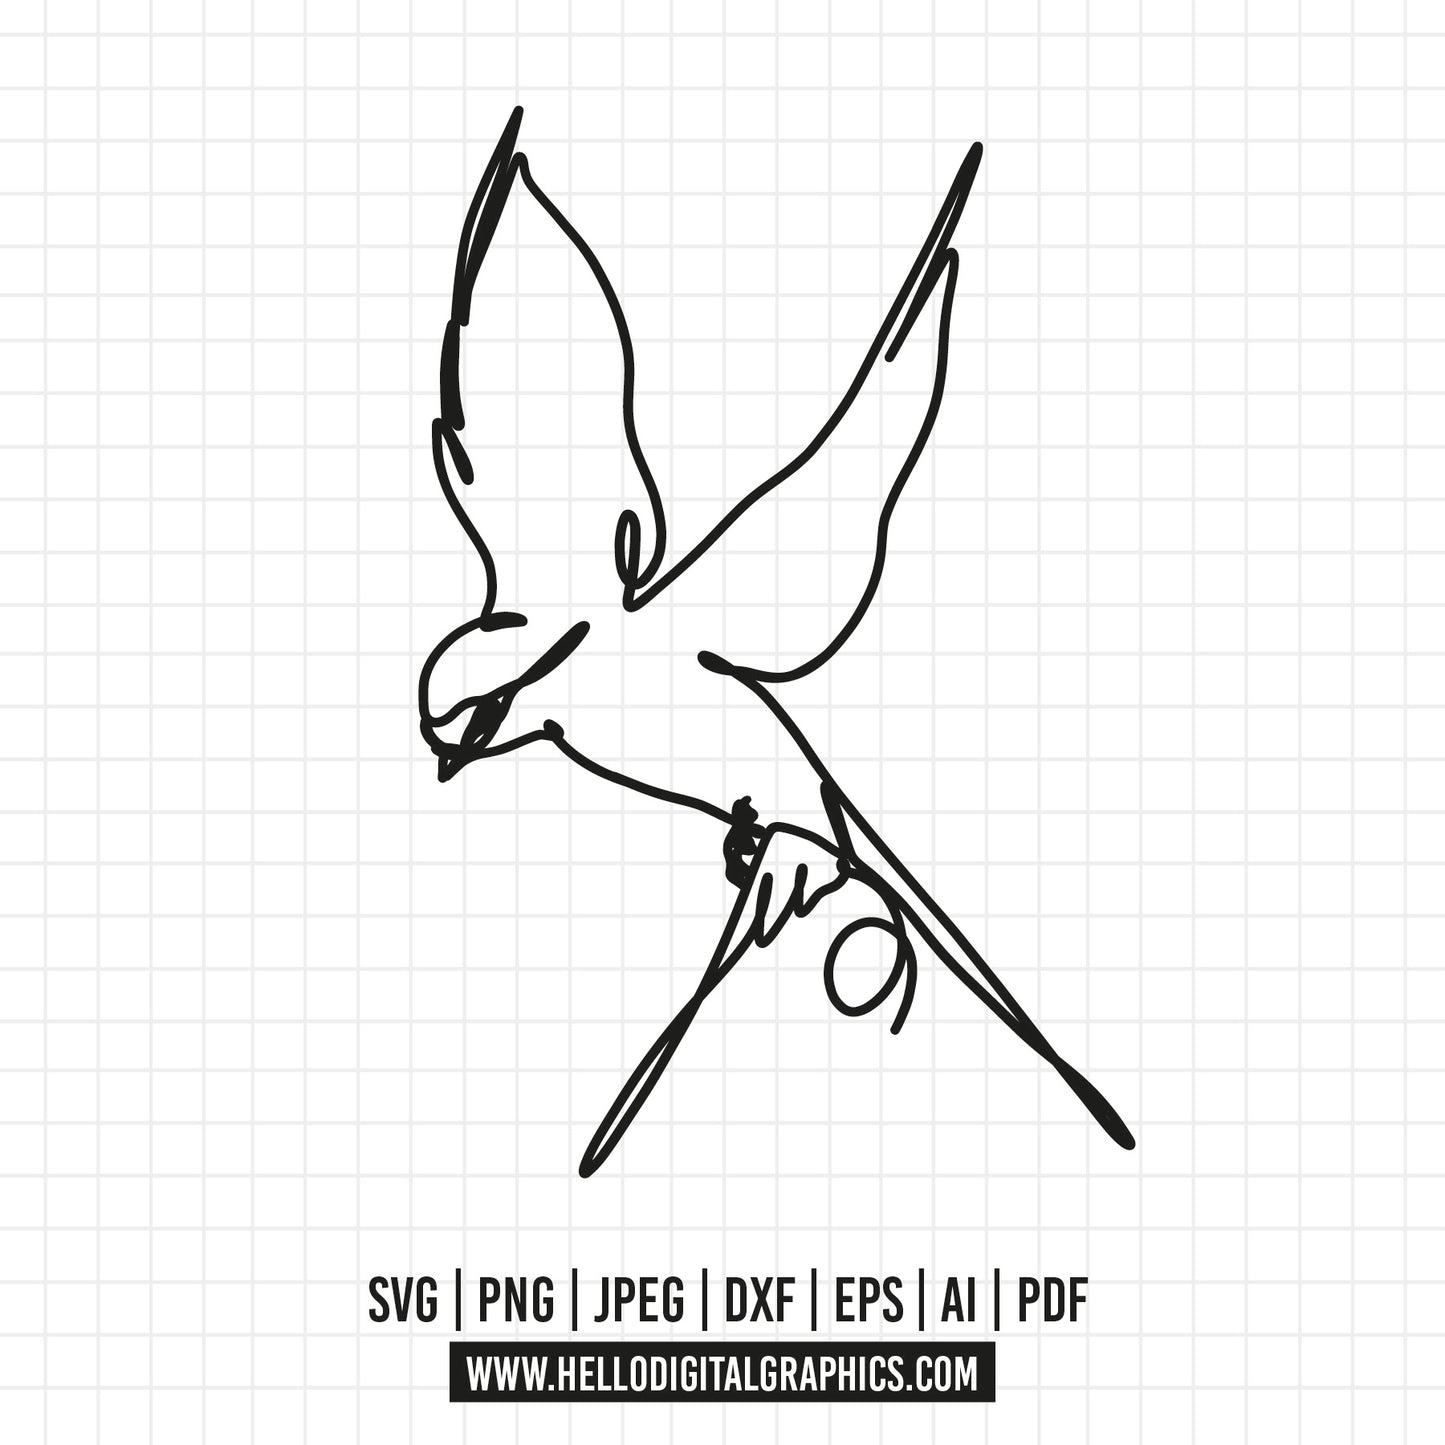 COD748- Bird svg, Fly bird svg, animals svg